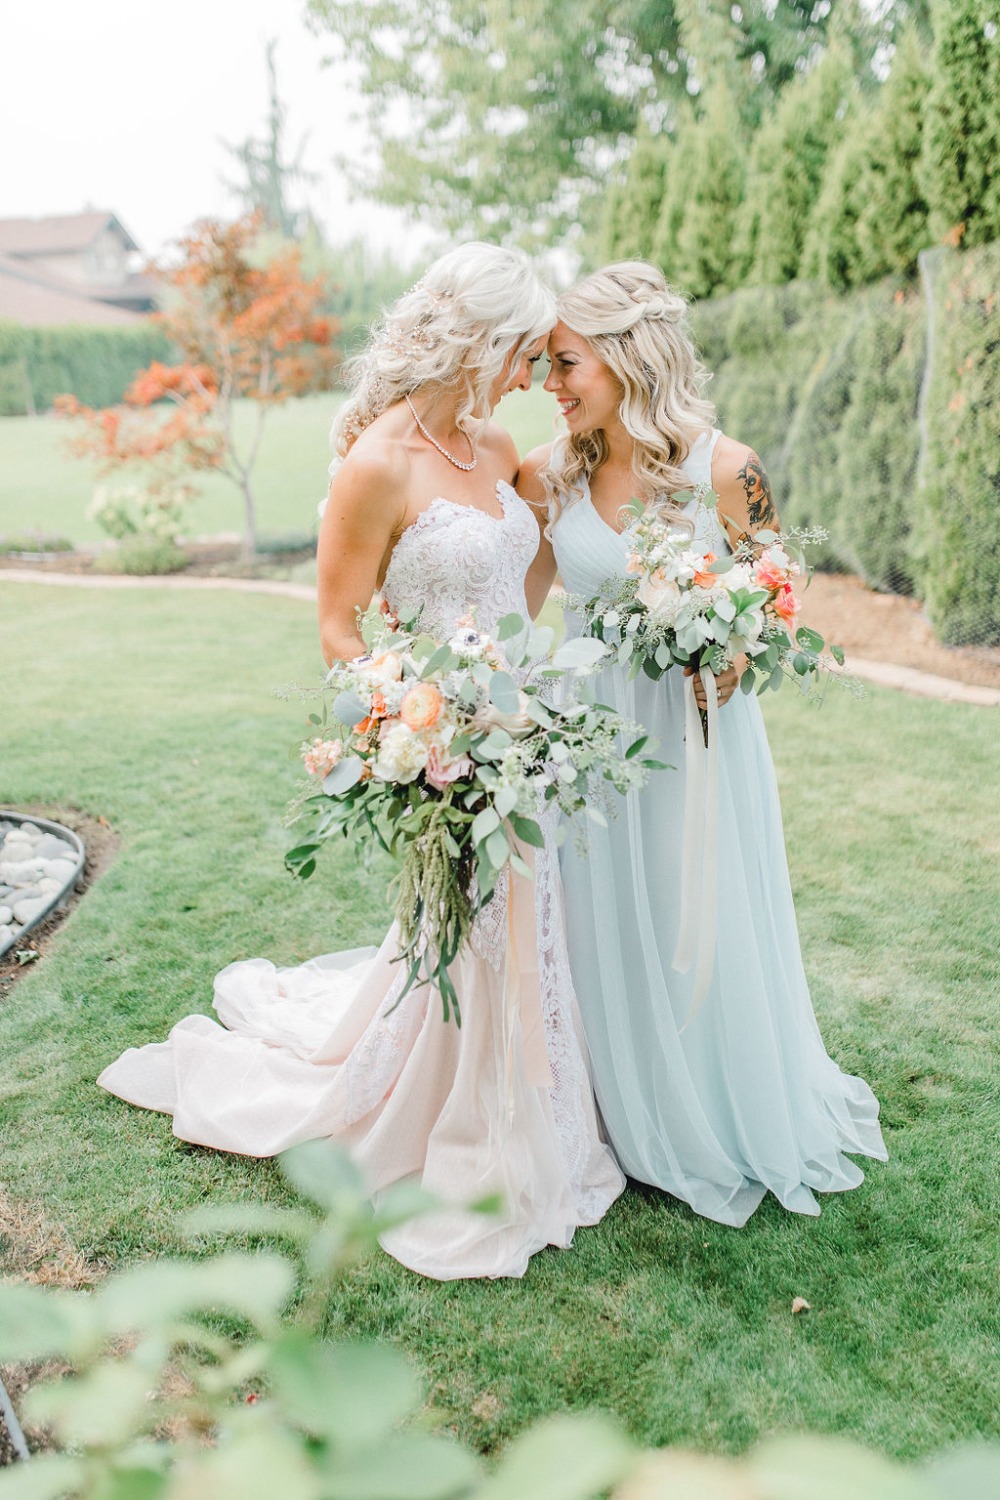 stylish garden wedding in shades of blue